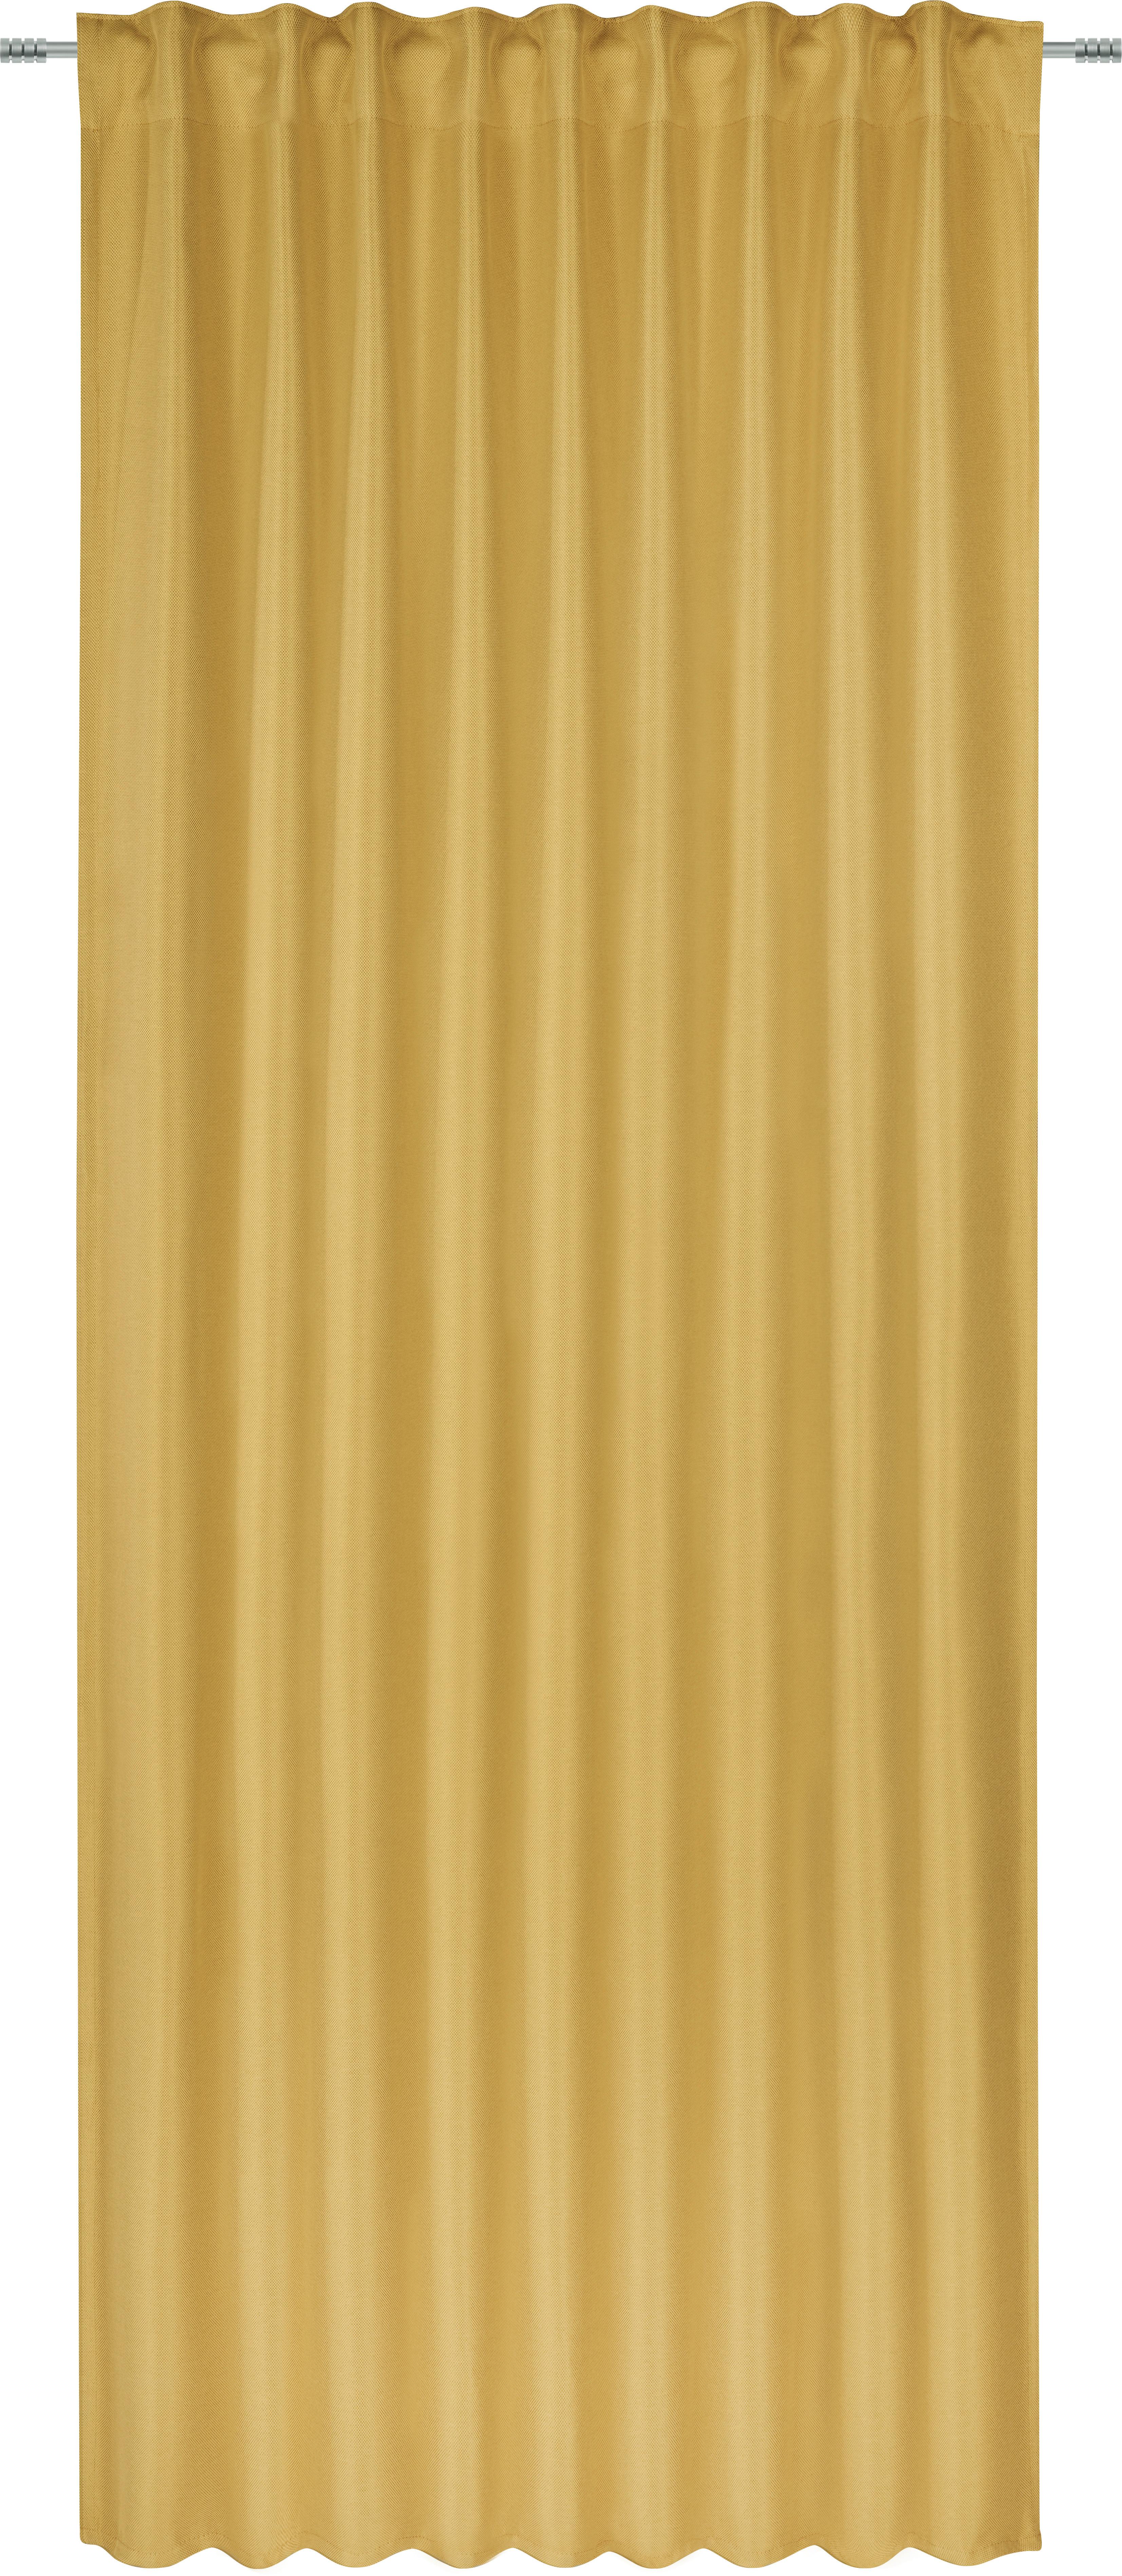 Verdunkelungsvorhang Riccarda in Currygelb ca. 135x255cm - Currygelb, MODERN, Textil (135/255cm) - Premium Living